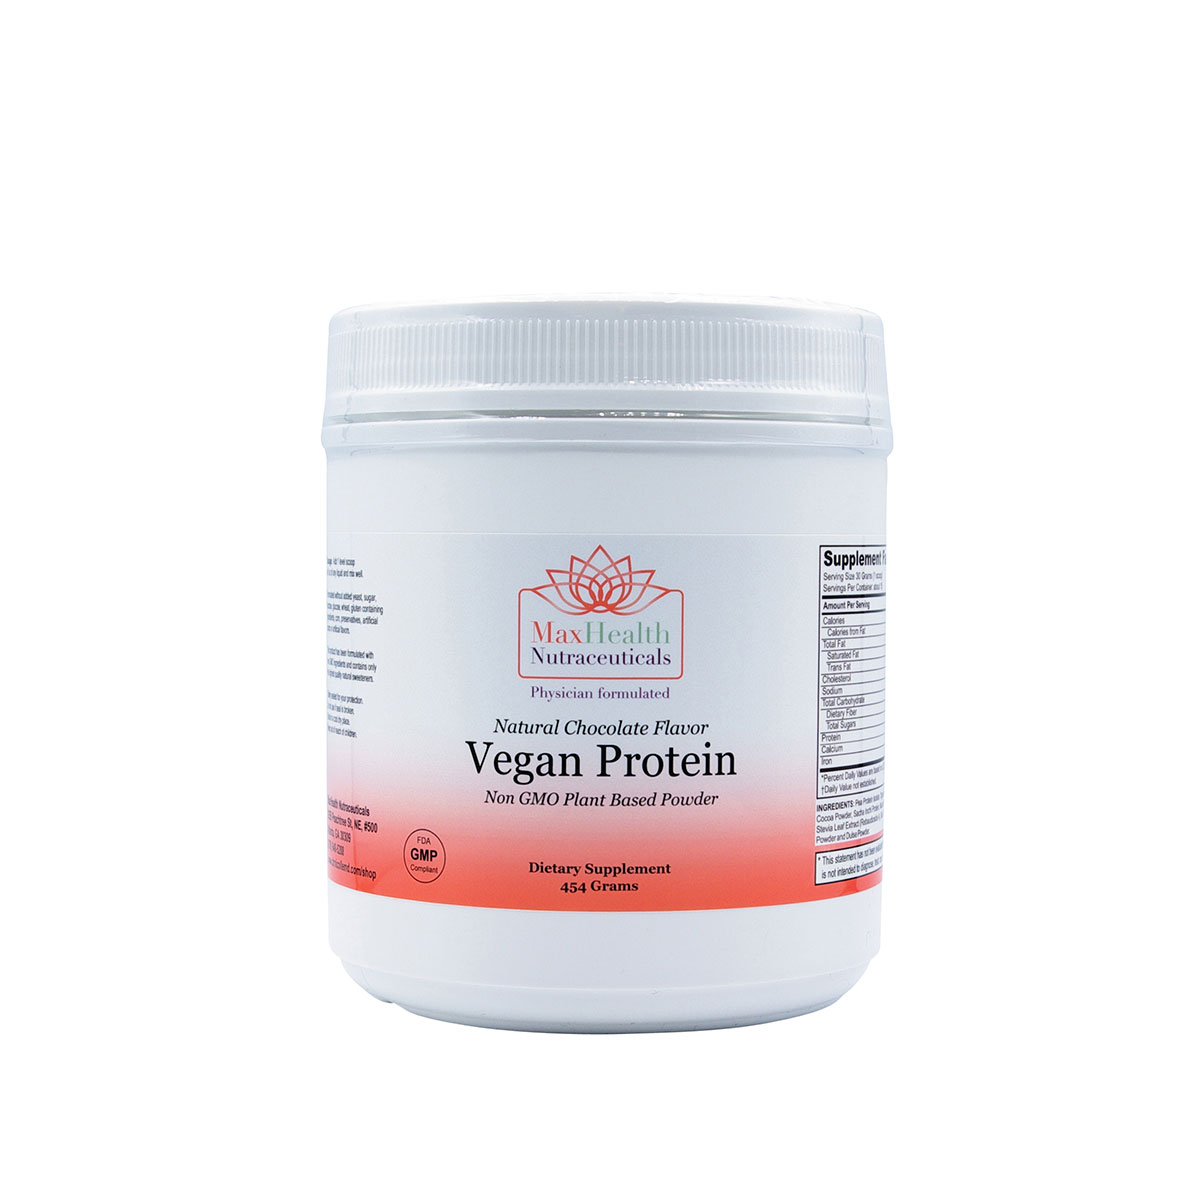 11Chocolate Flavor Vegan Protein Non GMO Plant Based Powder